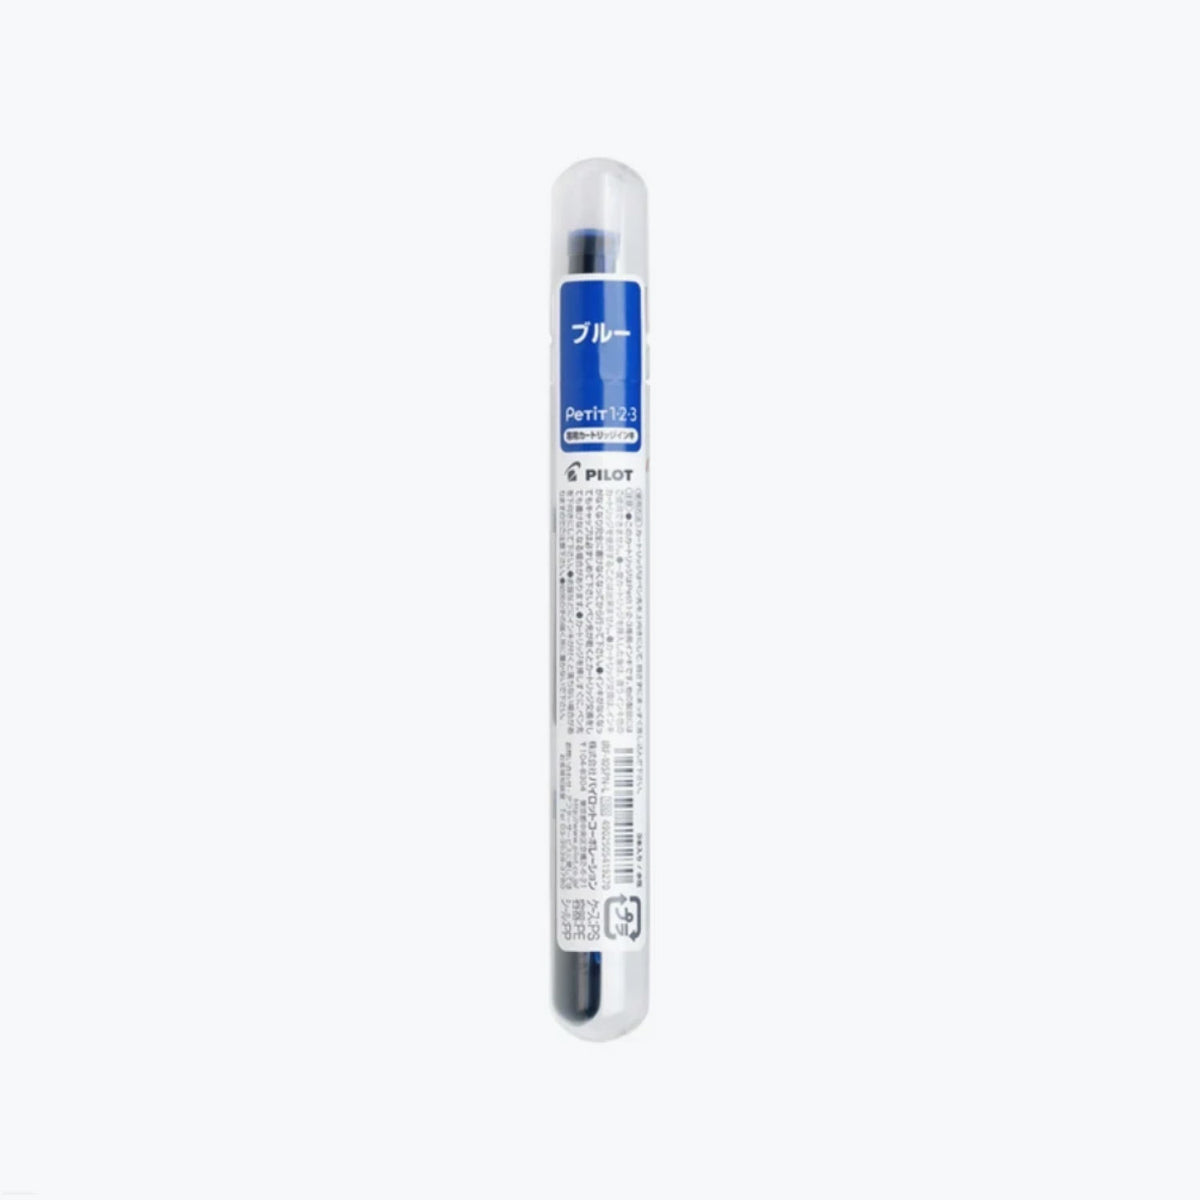 Pilot - Fountain Pen Refill - Petit - Blue <Outgoing>